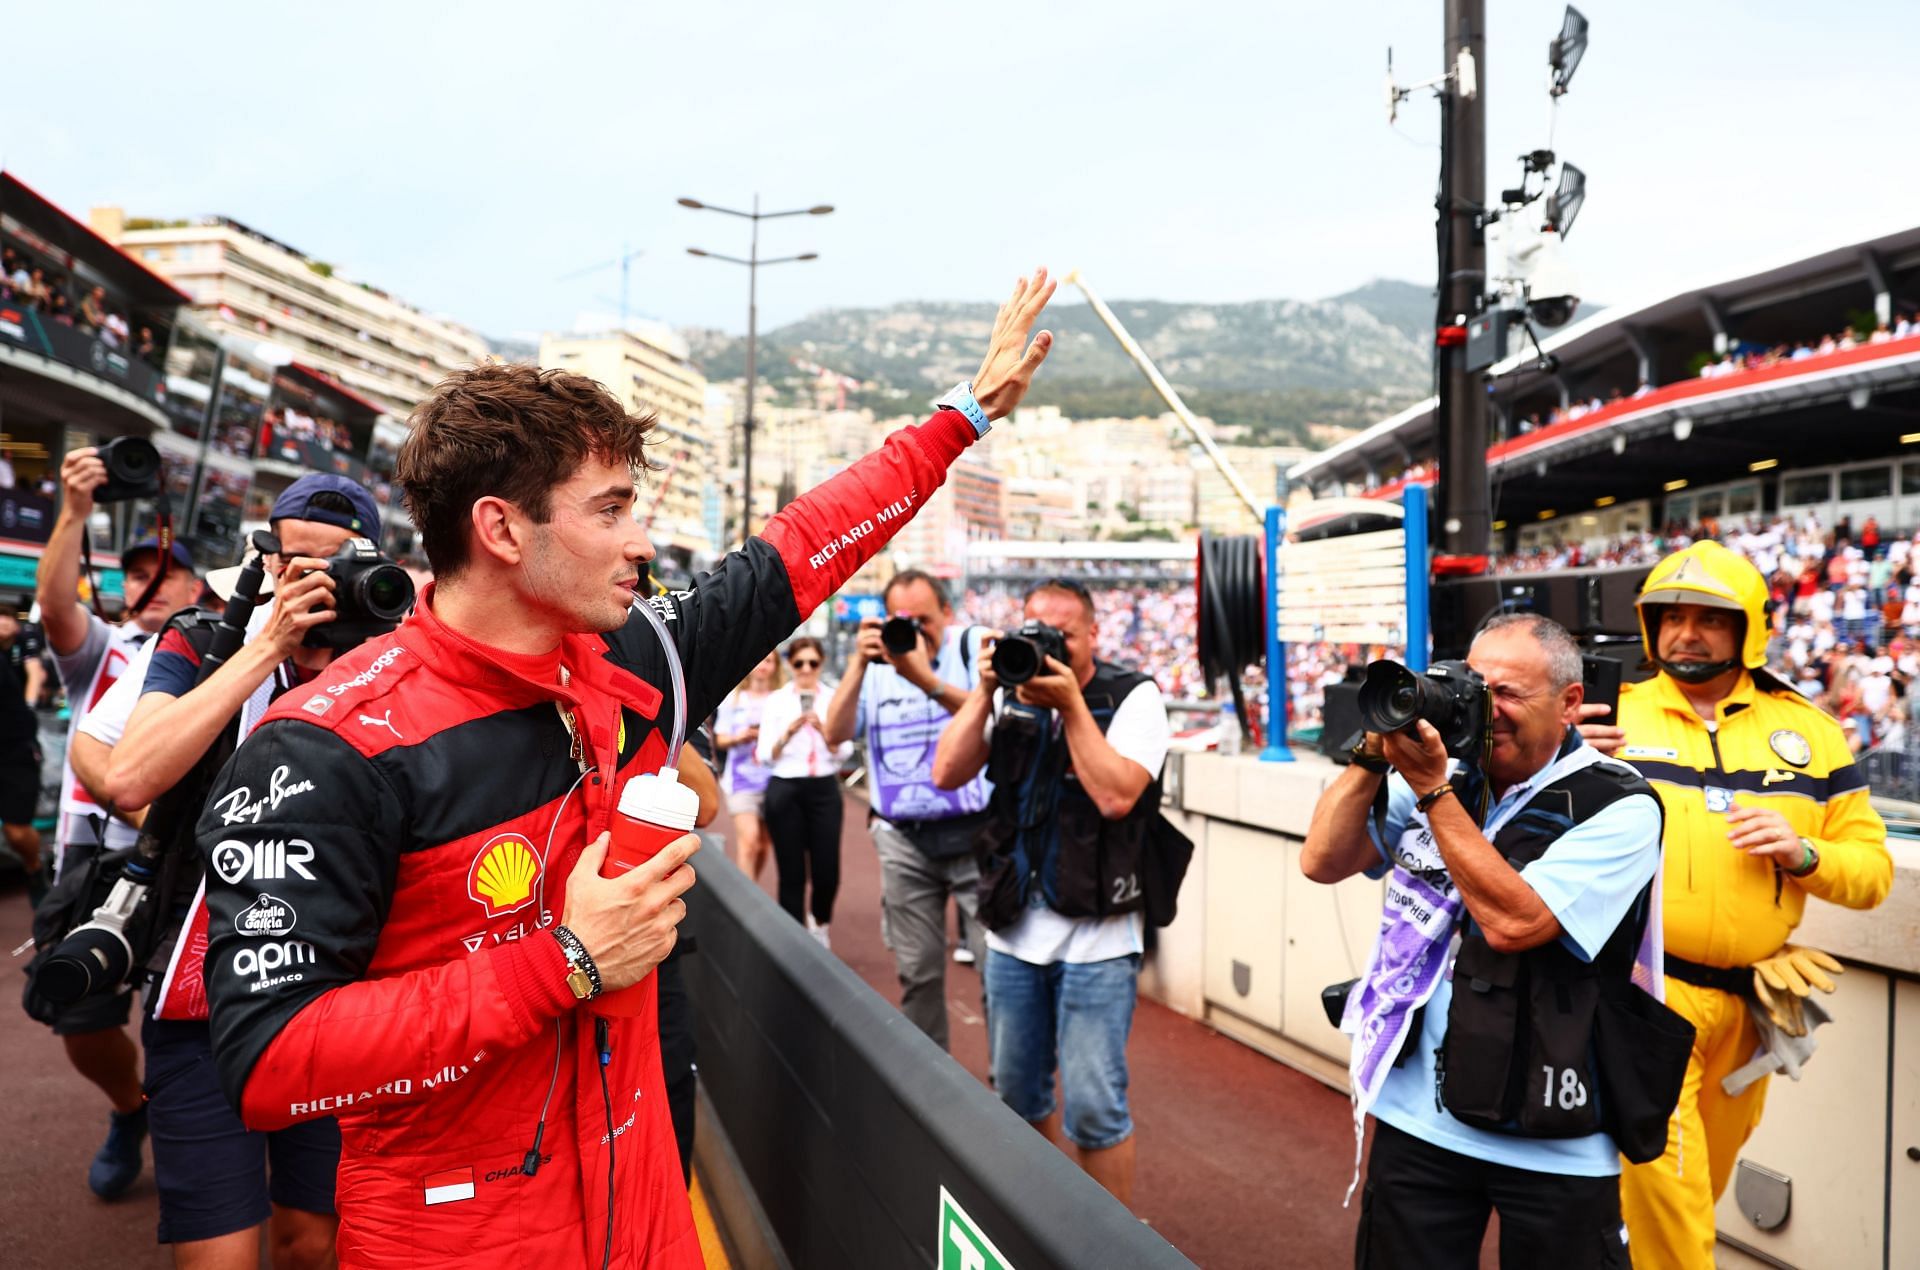 F1 Grand Prix of Monaco - Qualifying - Charles Leclerc takes pole position.